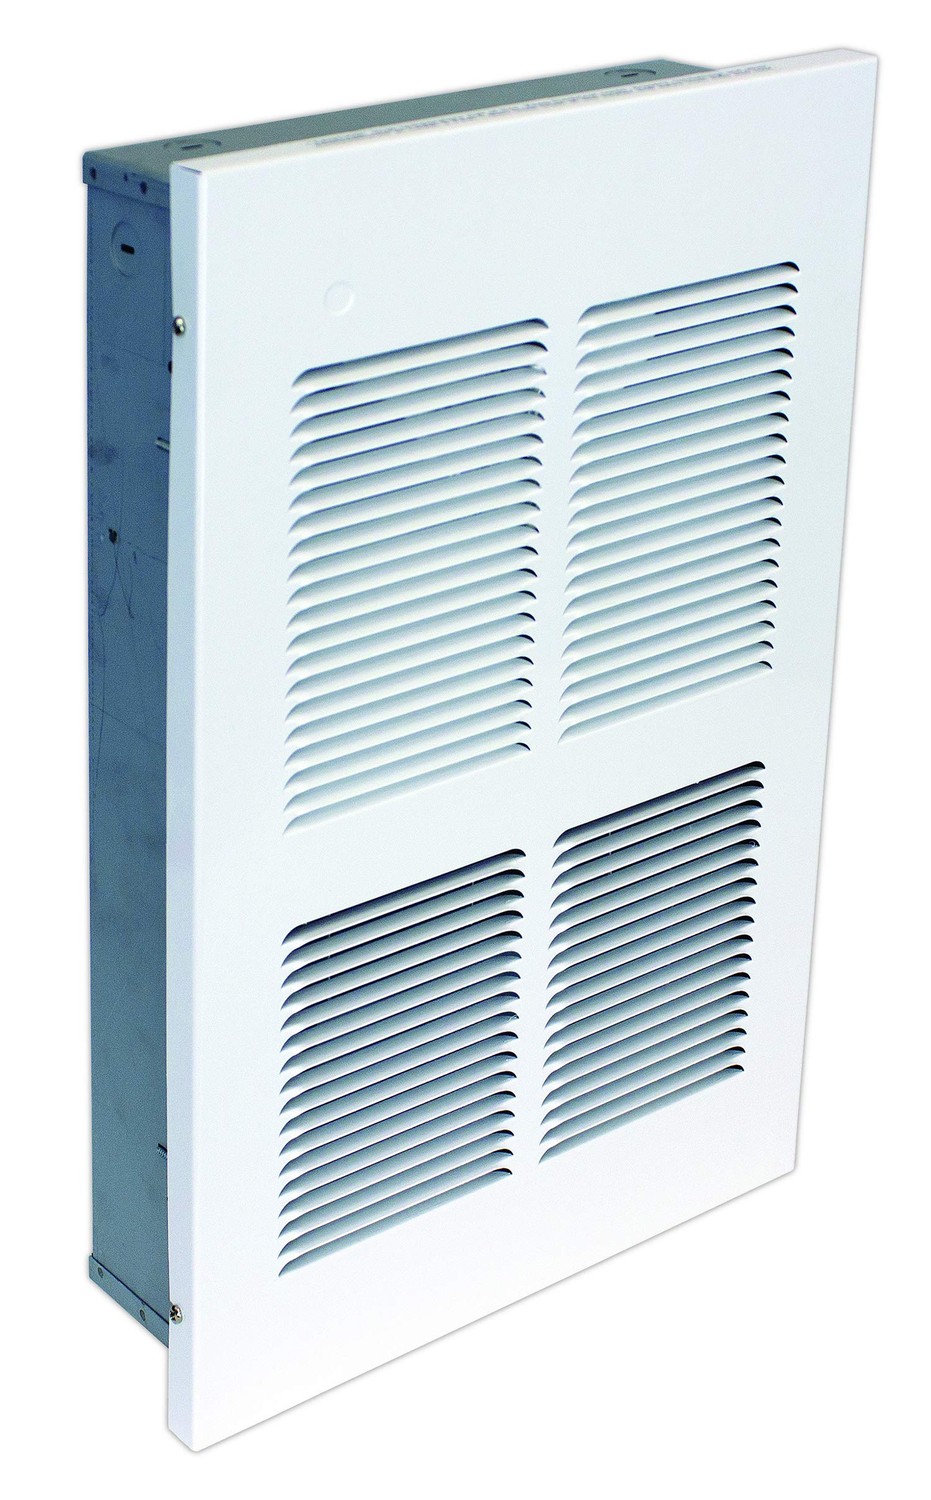 Efw Multiwatt Lg Wall Heater 208V 4000W White